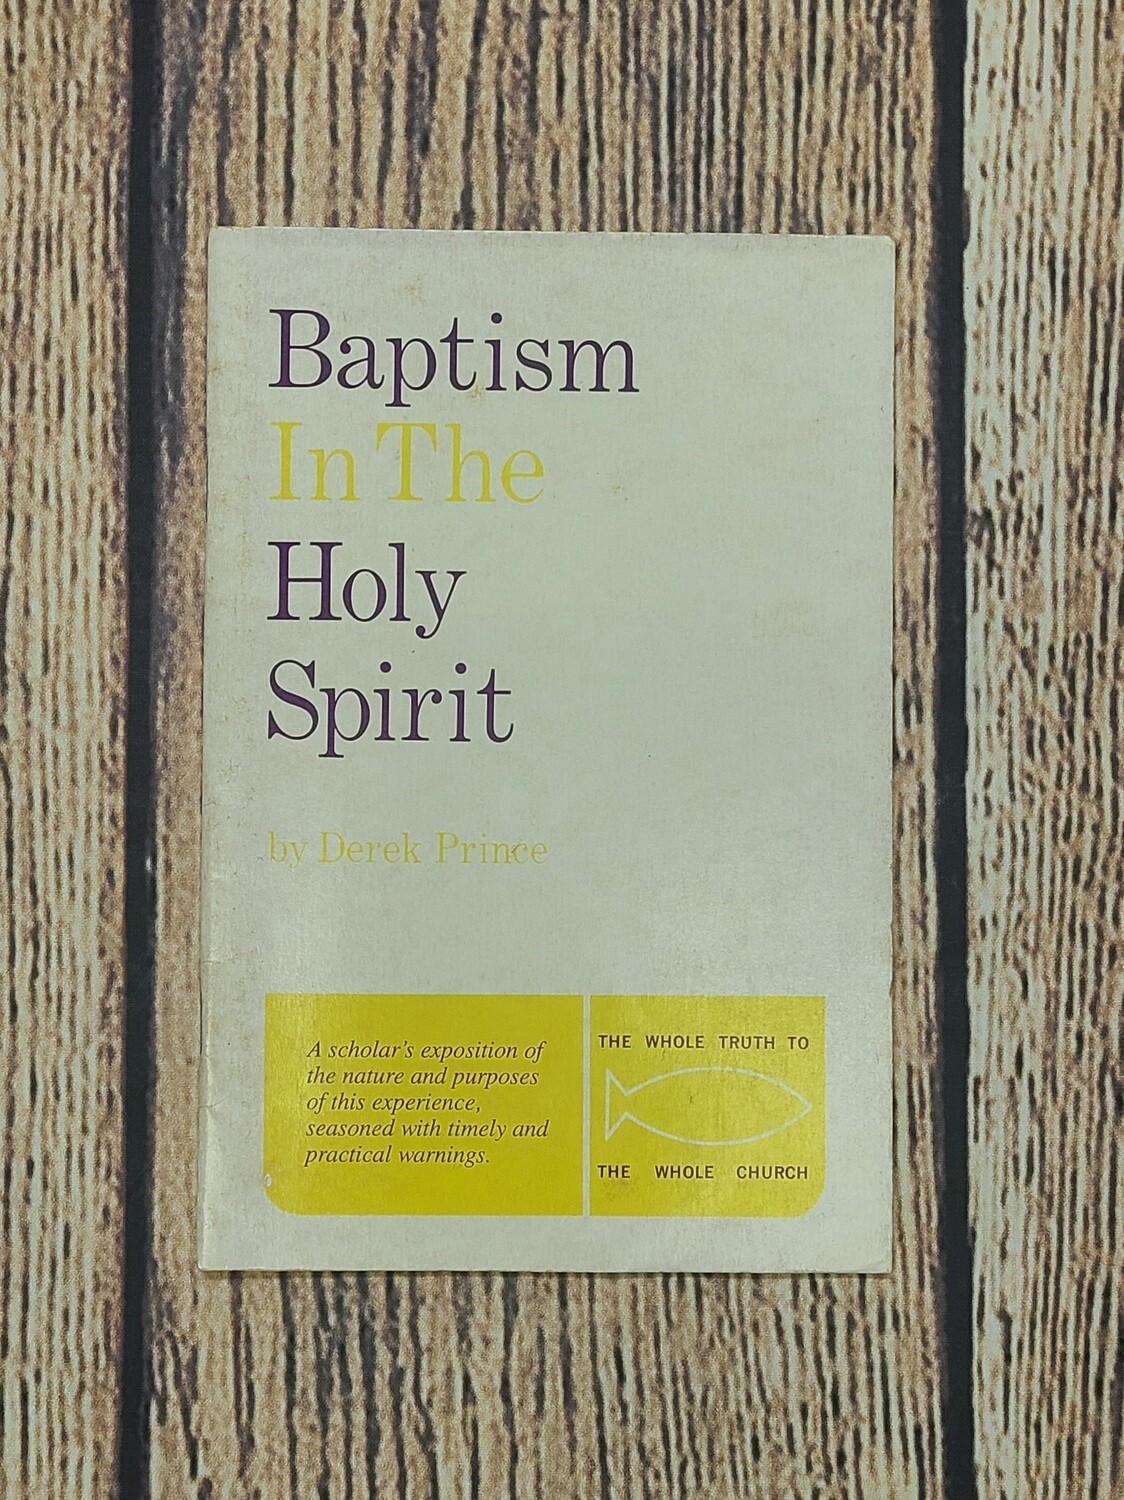 Baptism in the Holy Spirit by Derek Prince